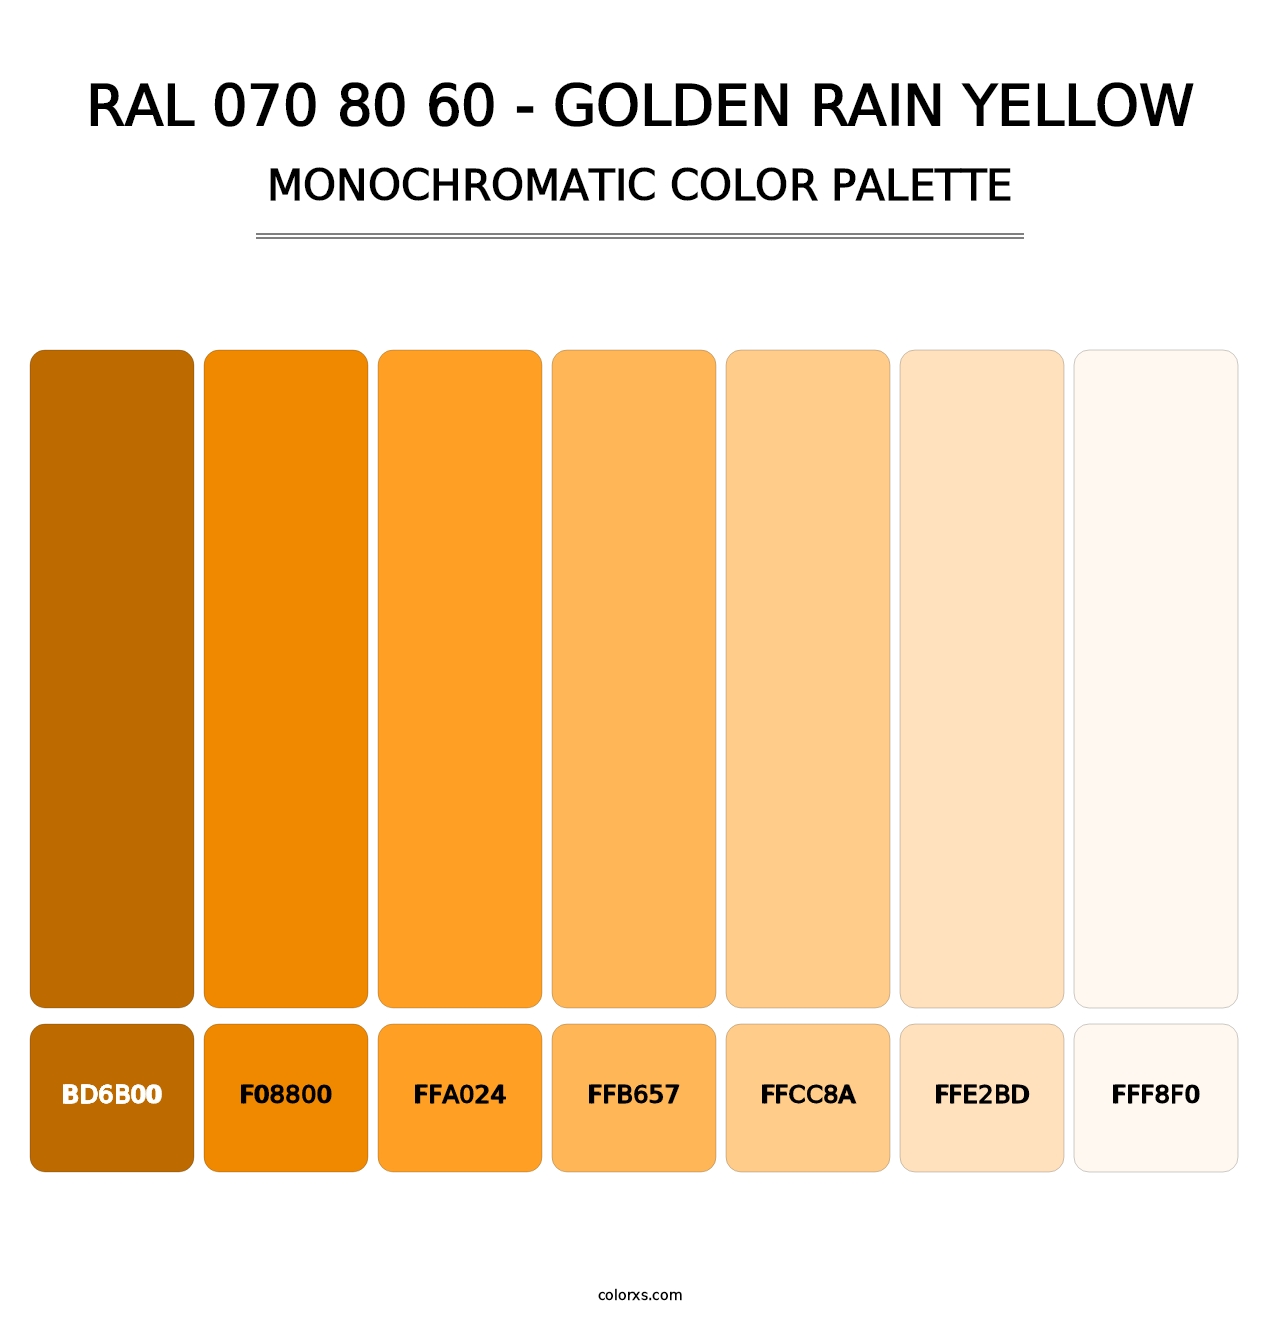 RAL 070 80 60 - Golden Rain Yellow - Monochromatic Color Palette